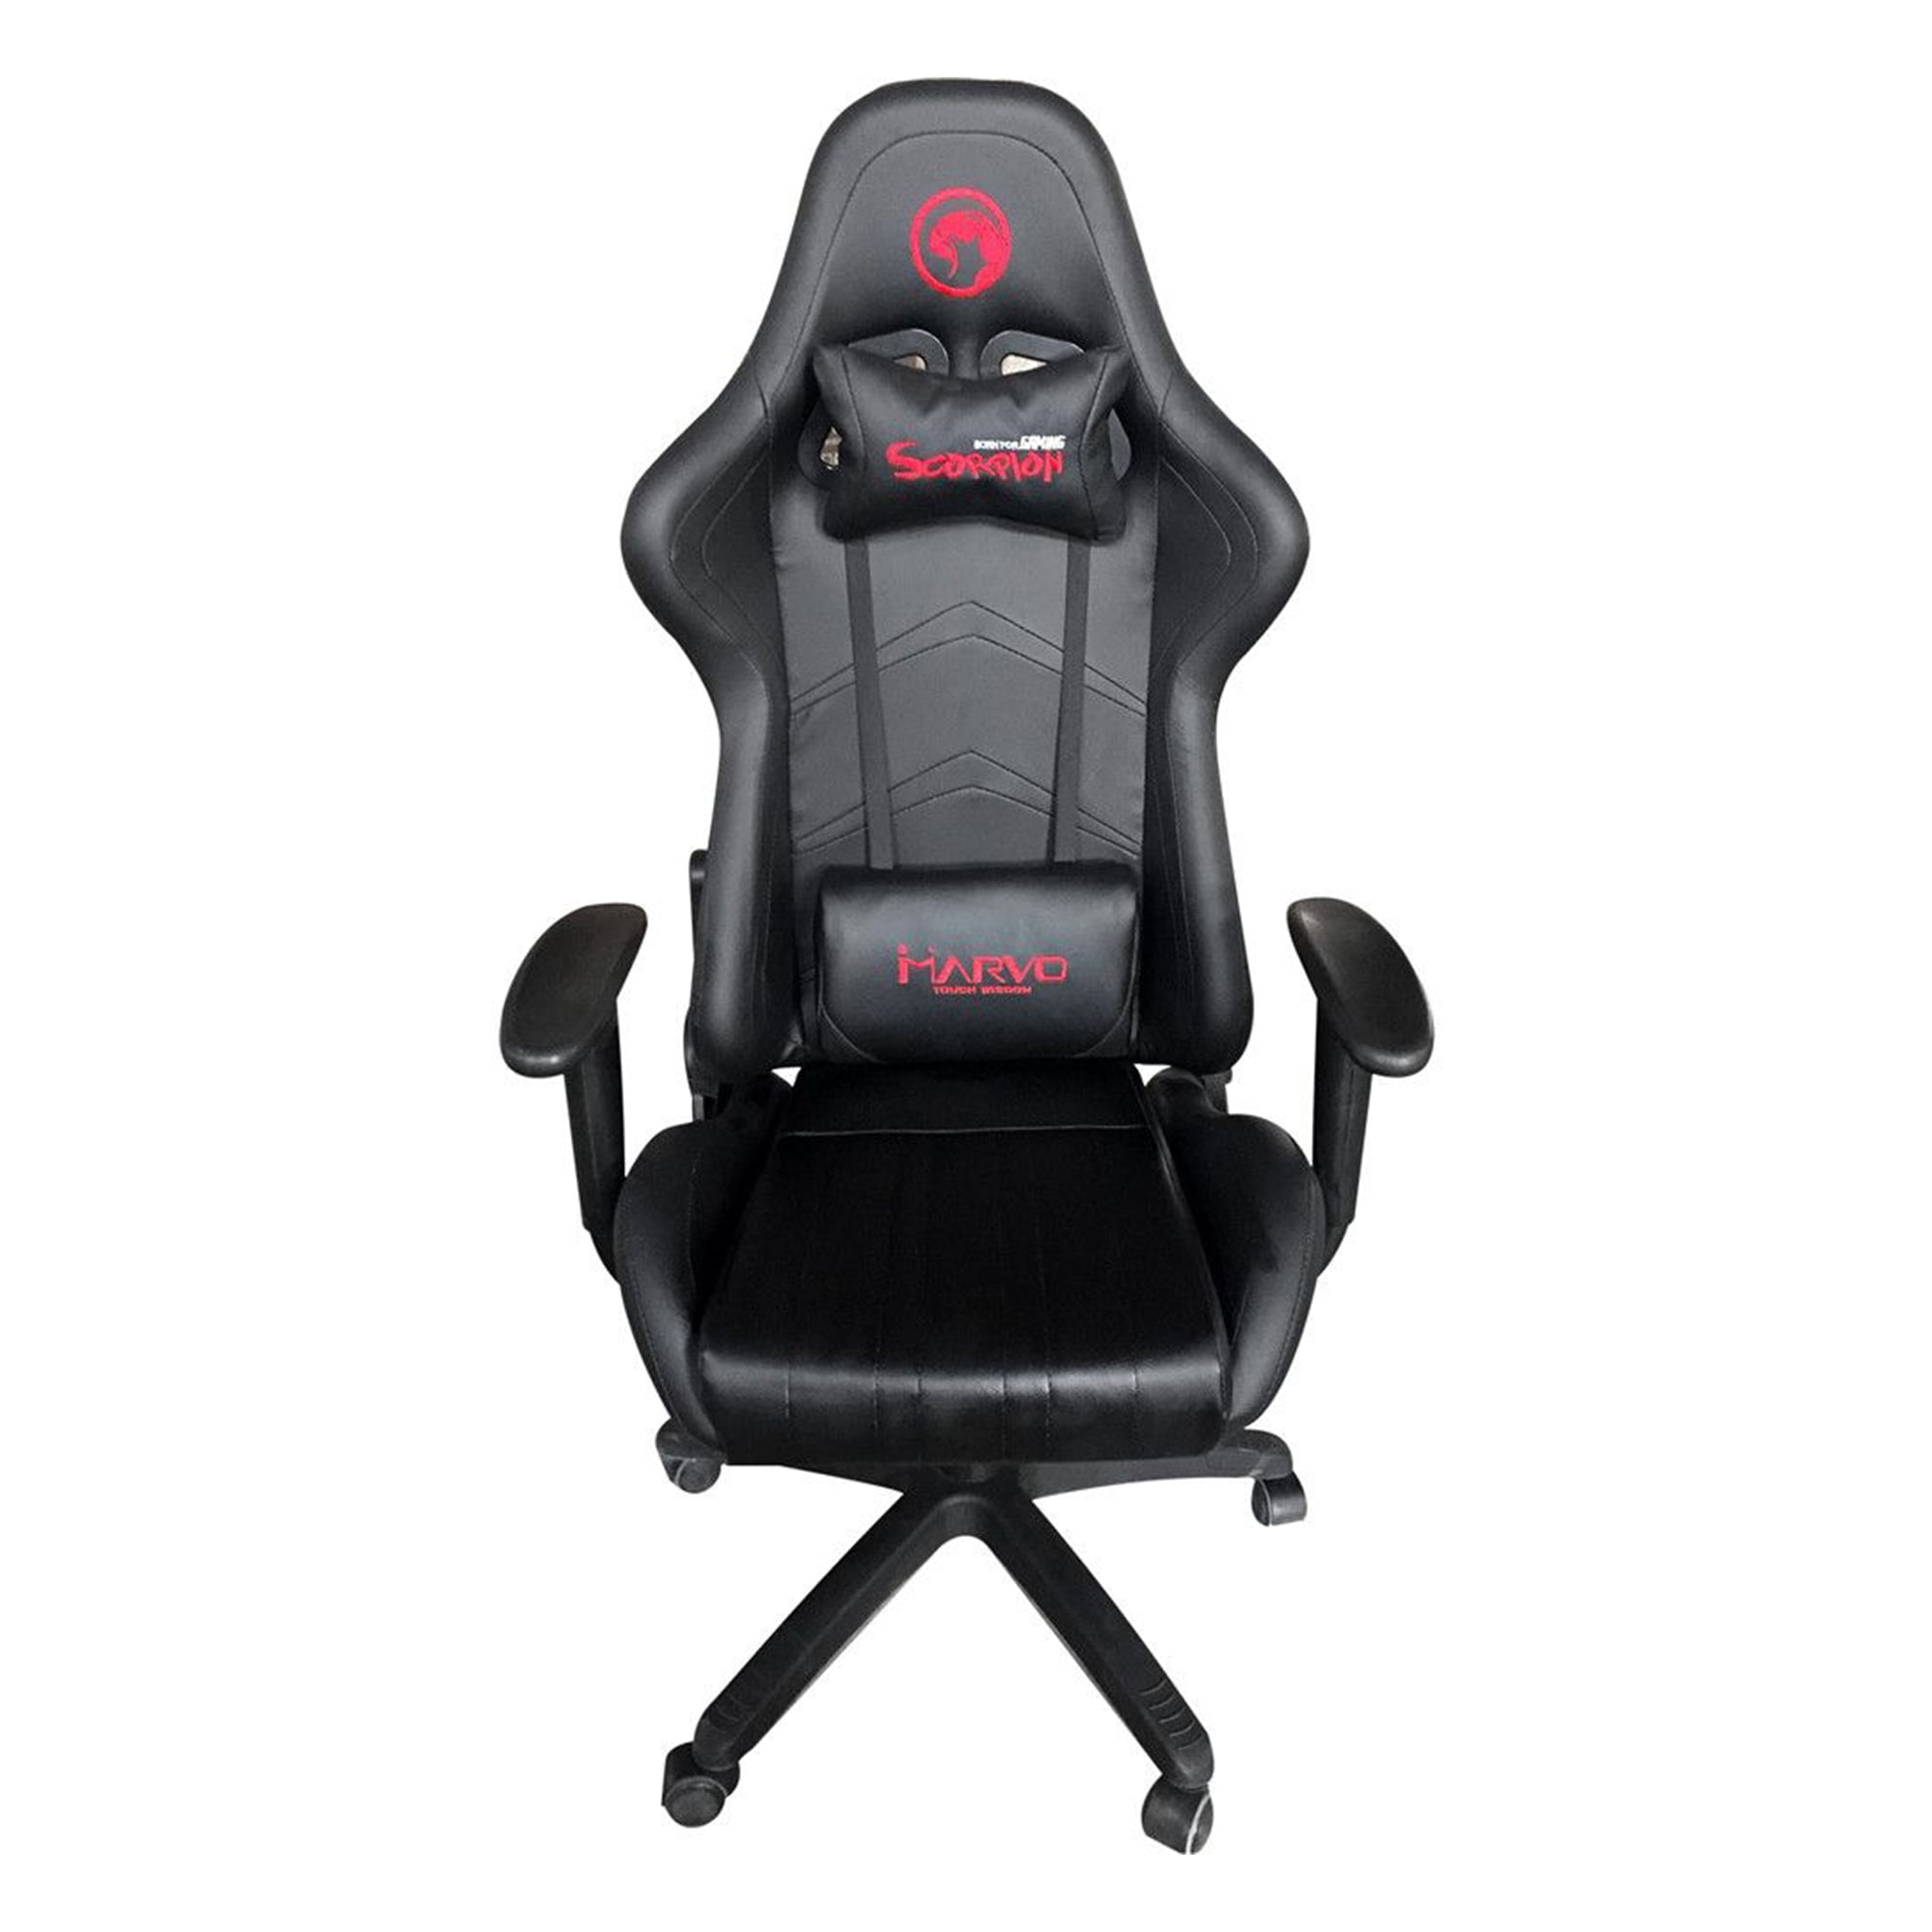 Marvo Scorpion Ch 106 Adjustable Gaming Chair Black Black